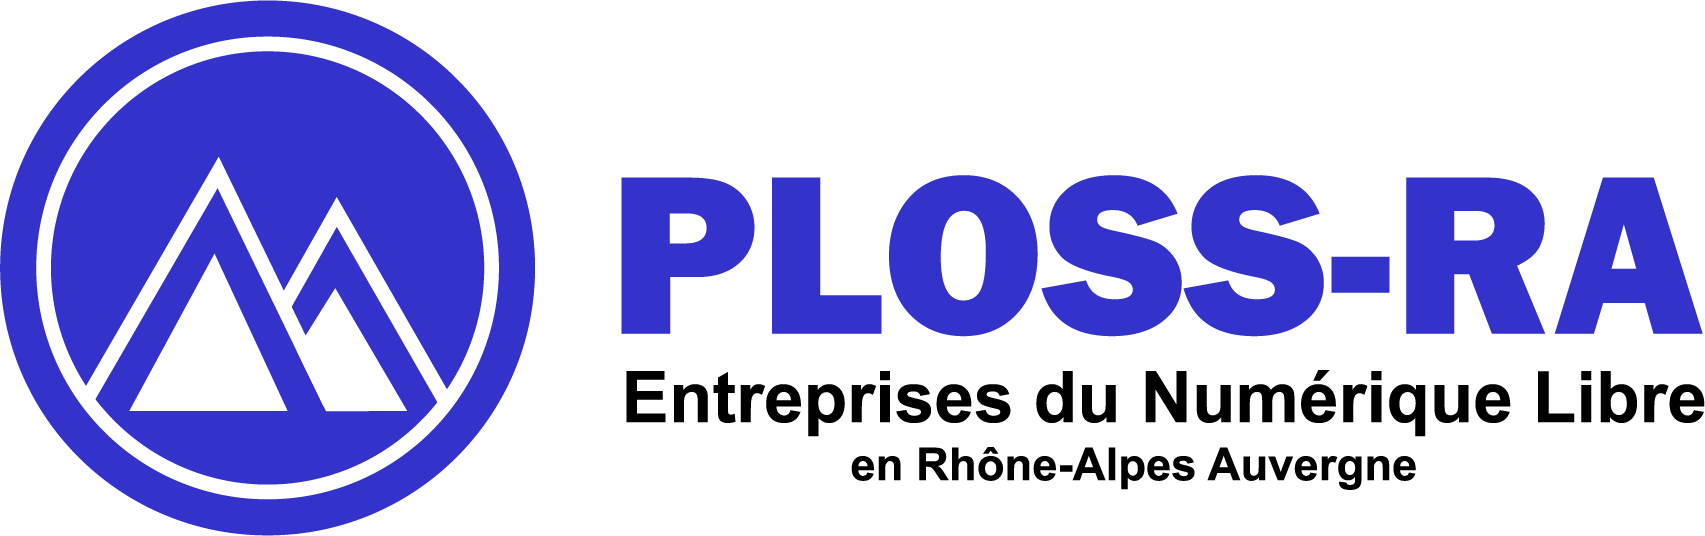 Logo PLOSS RA